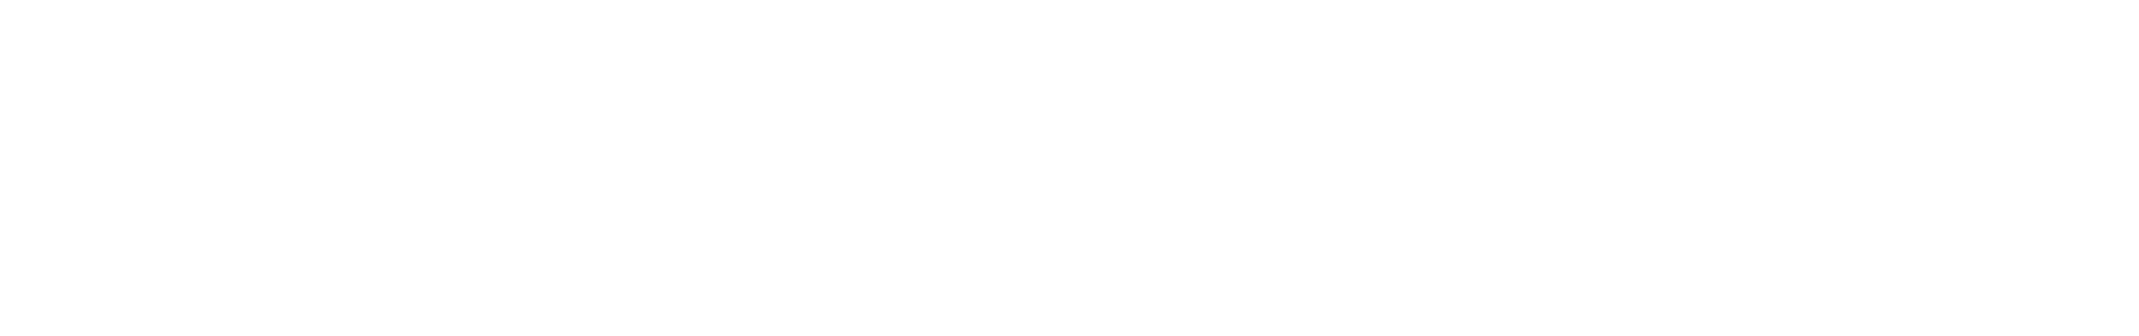 Endowment Trust Fund for Catholic Education in Kansas City